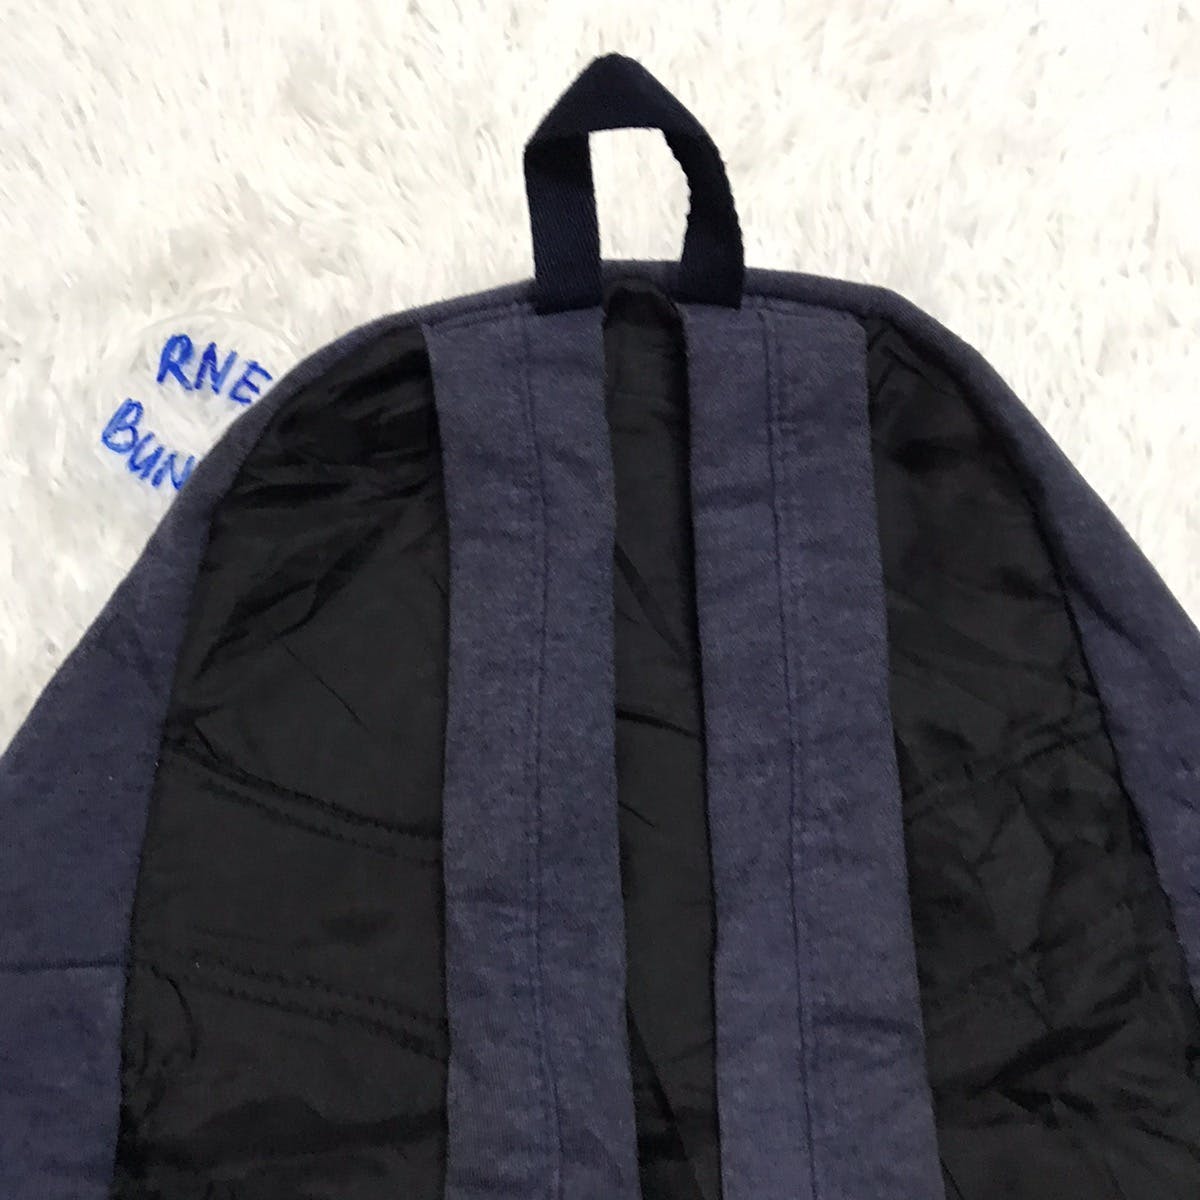 Adidas Backpack - 11